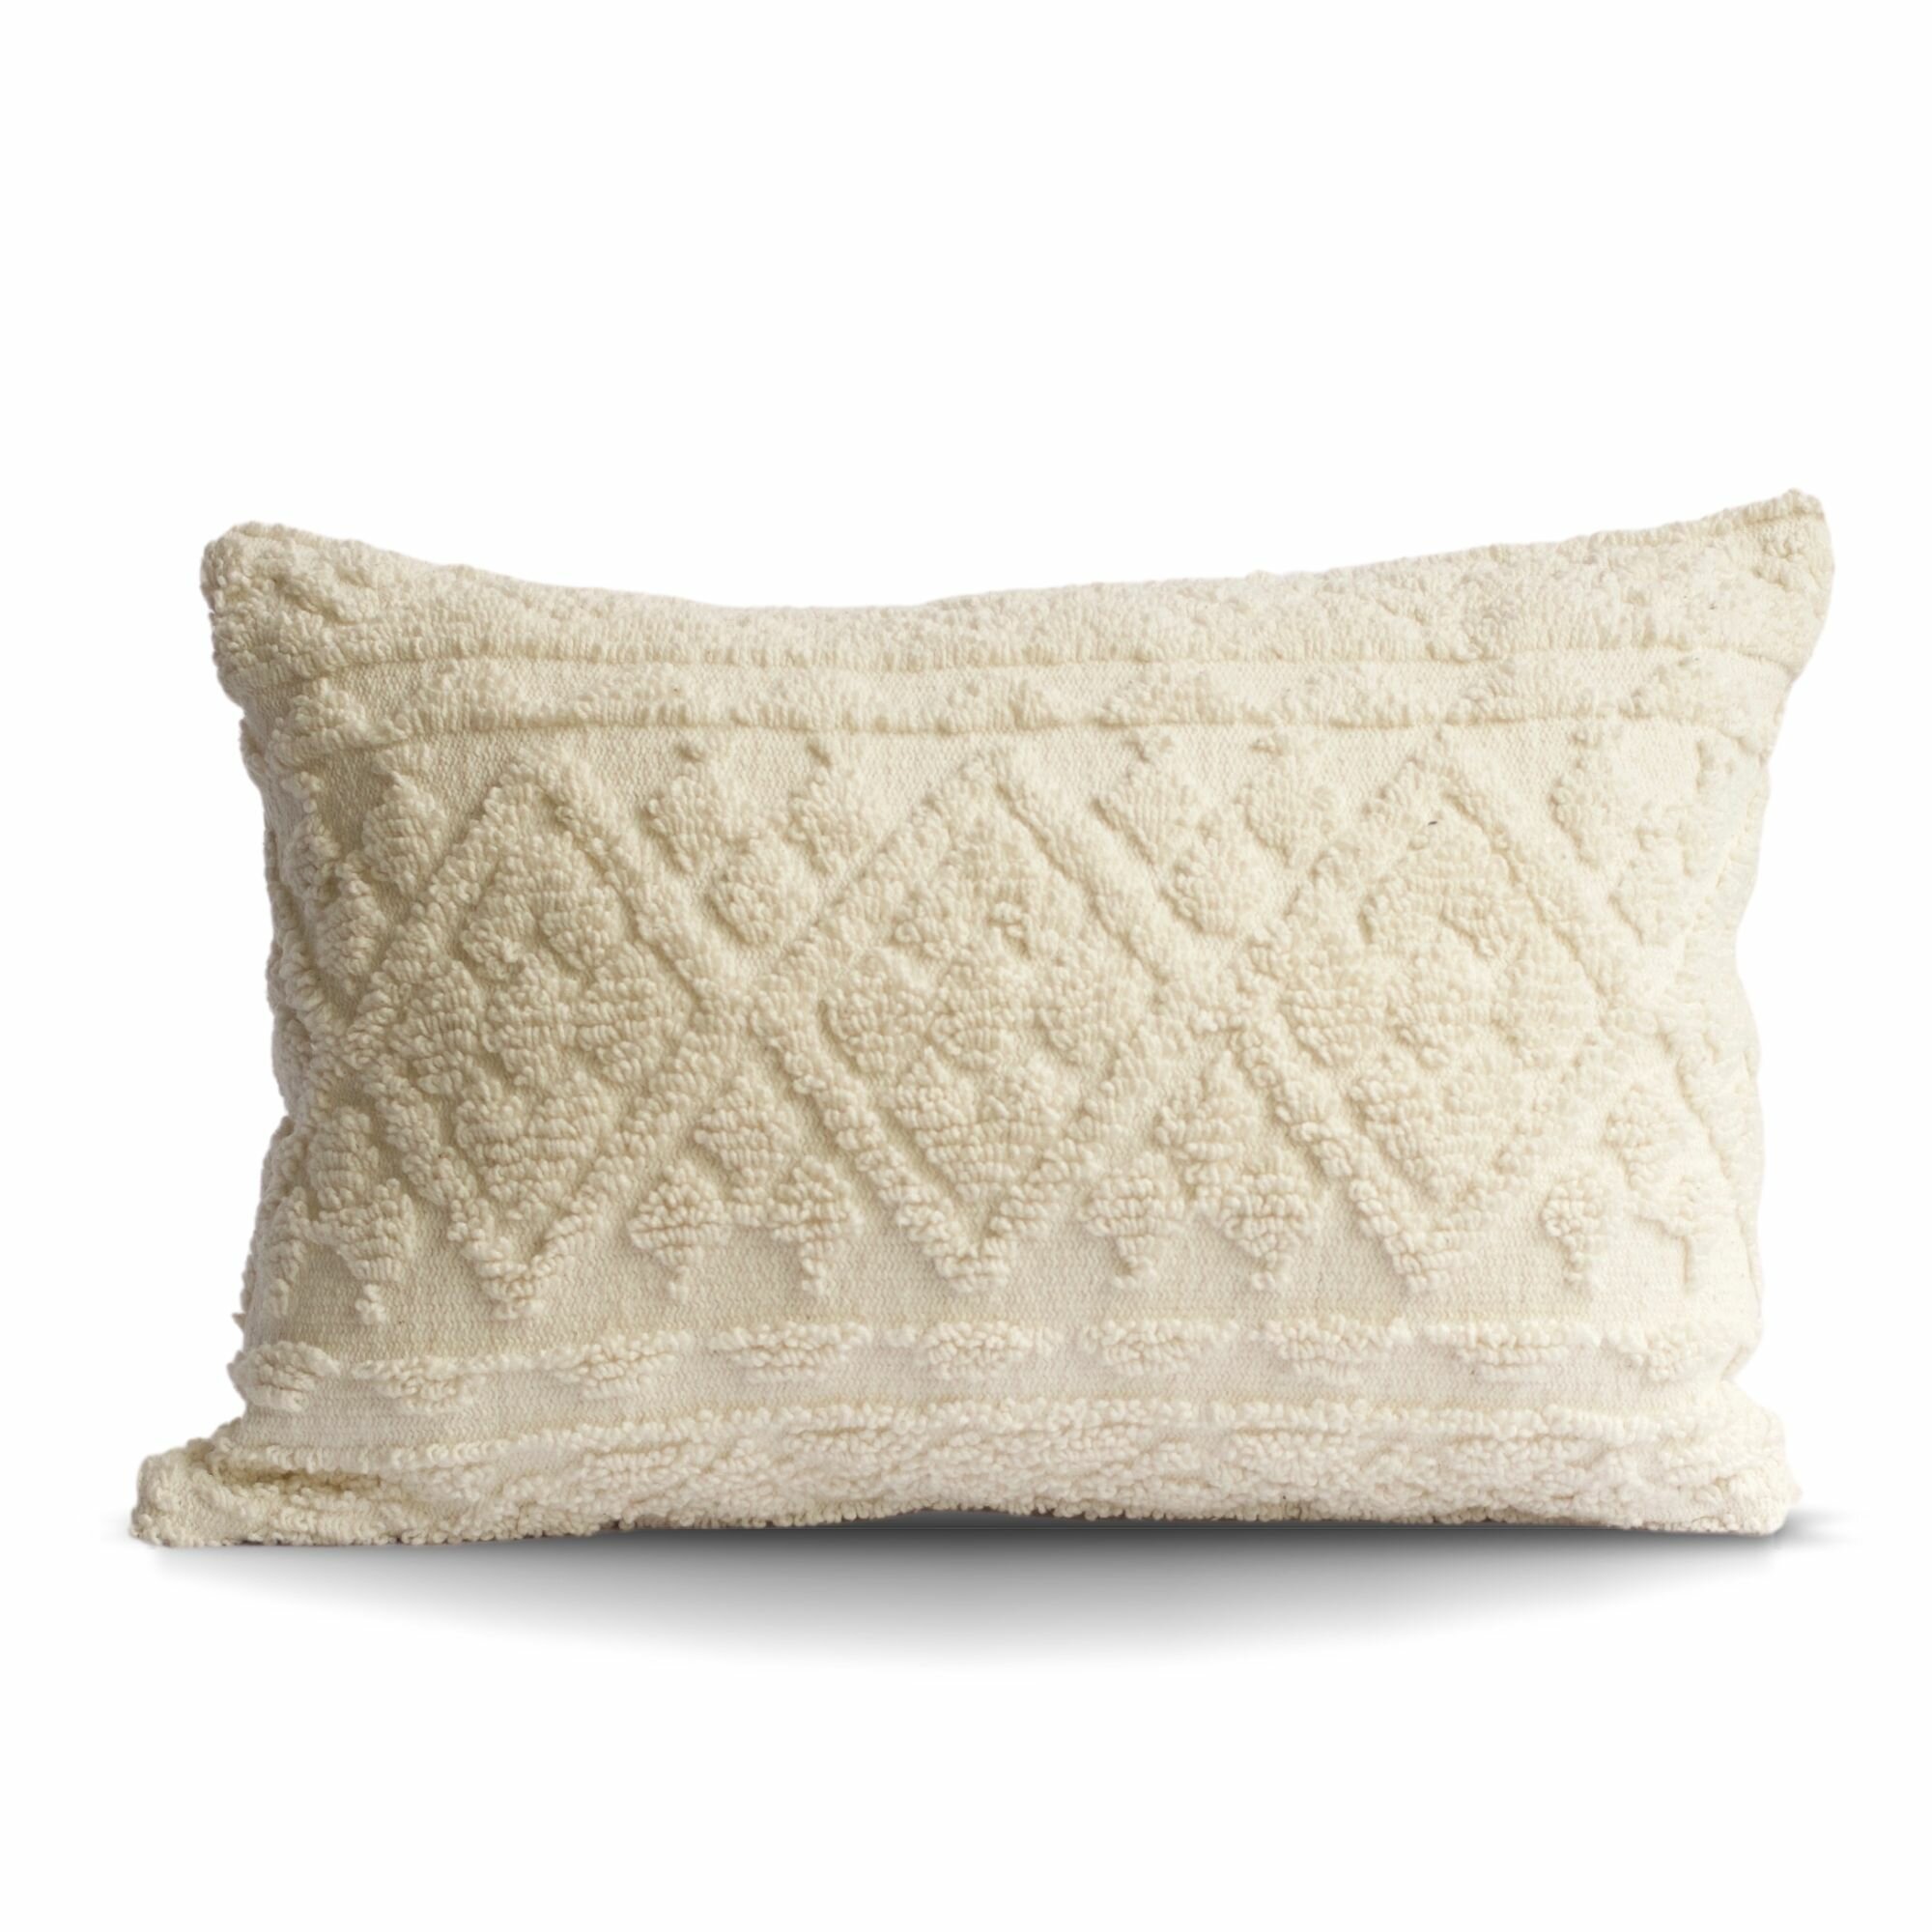 Langley Street Carnfinton Embroidered Pillow Cover & Reviews | Wayfair